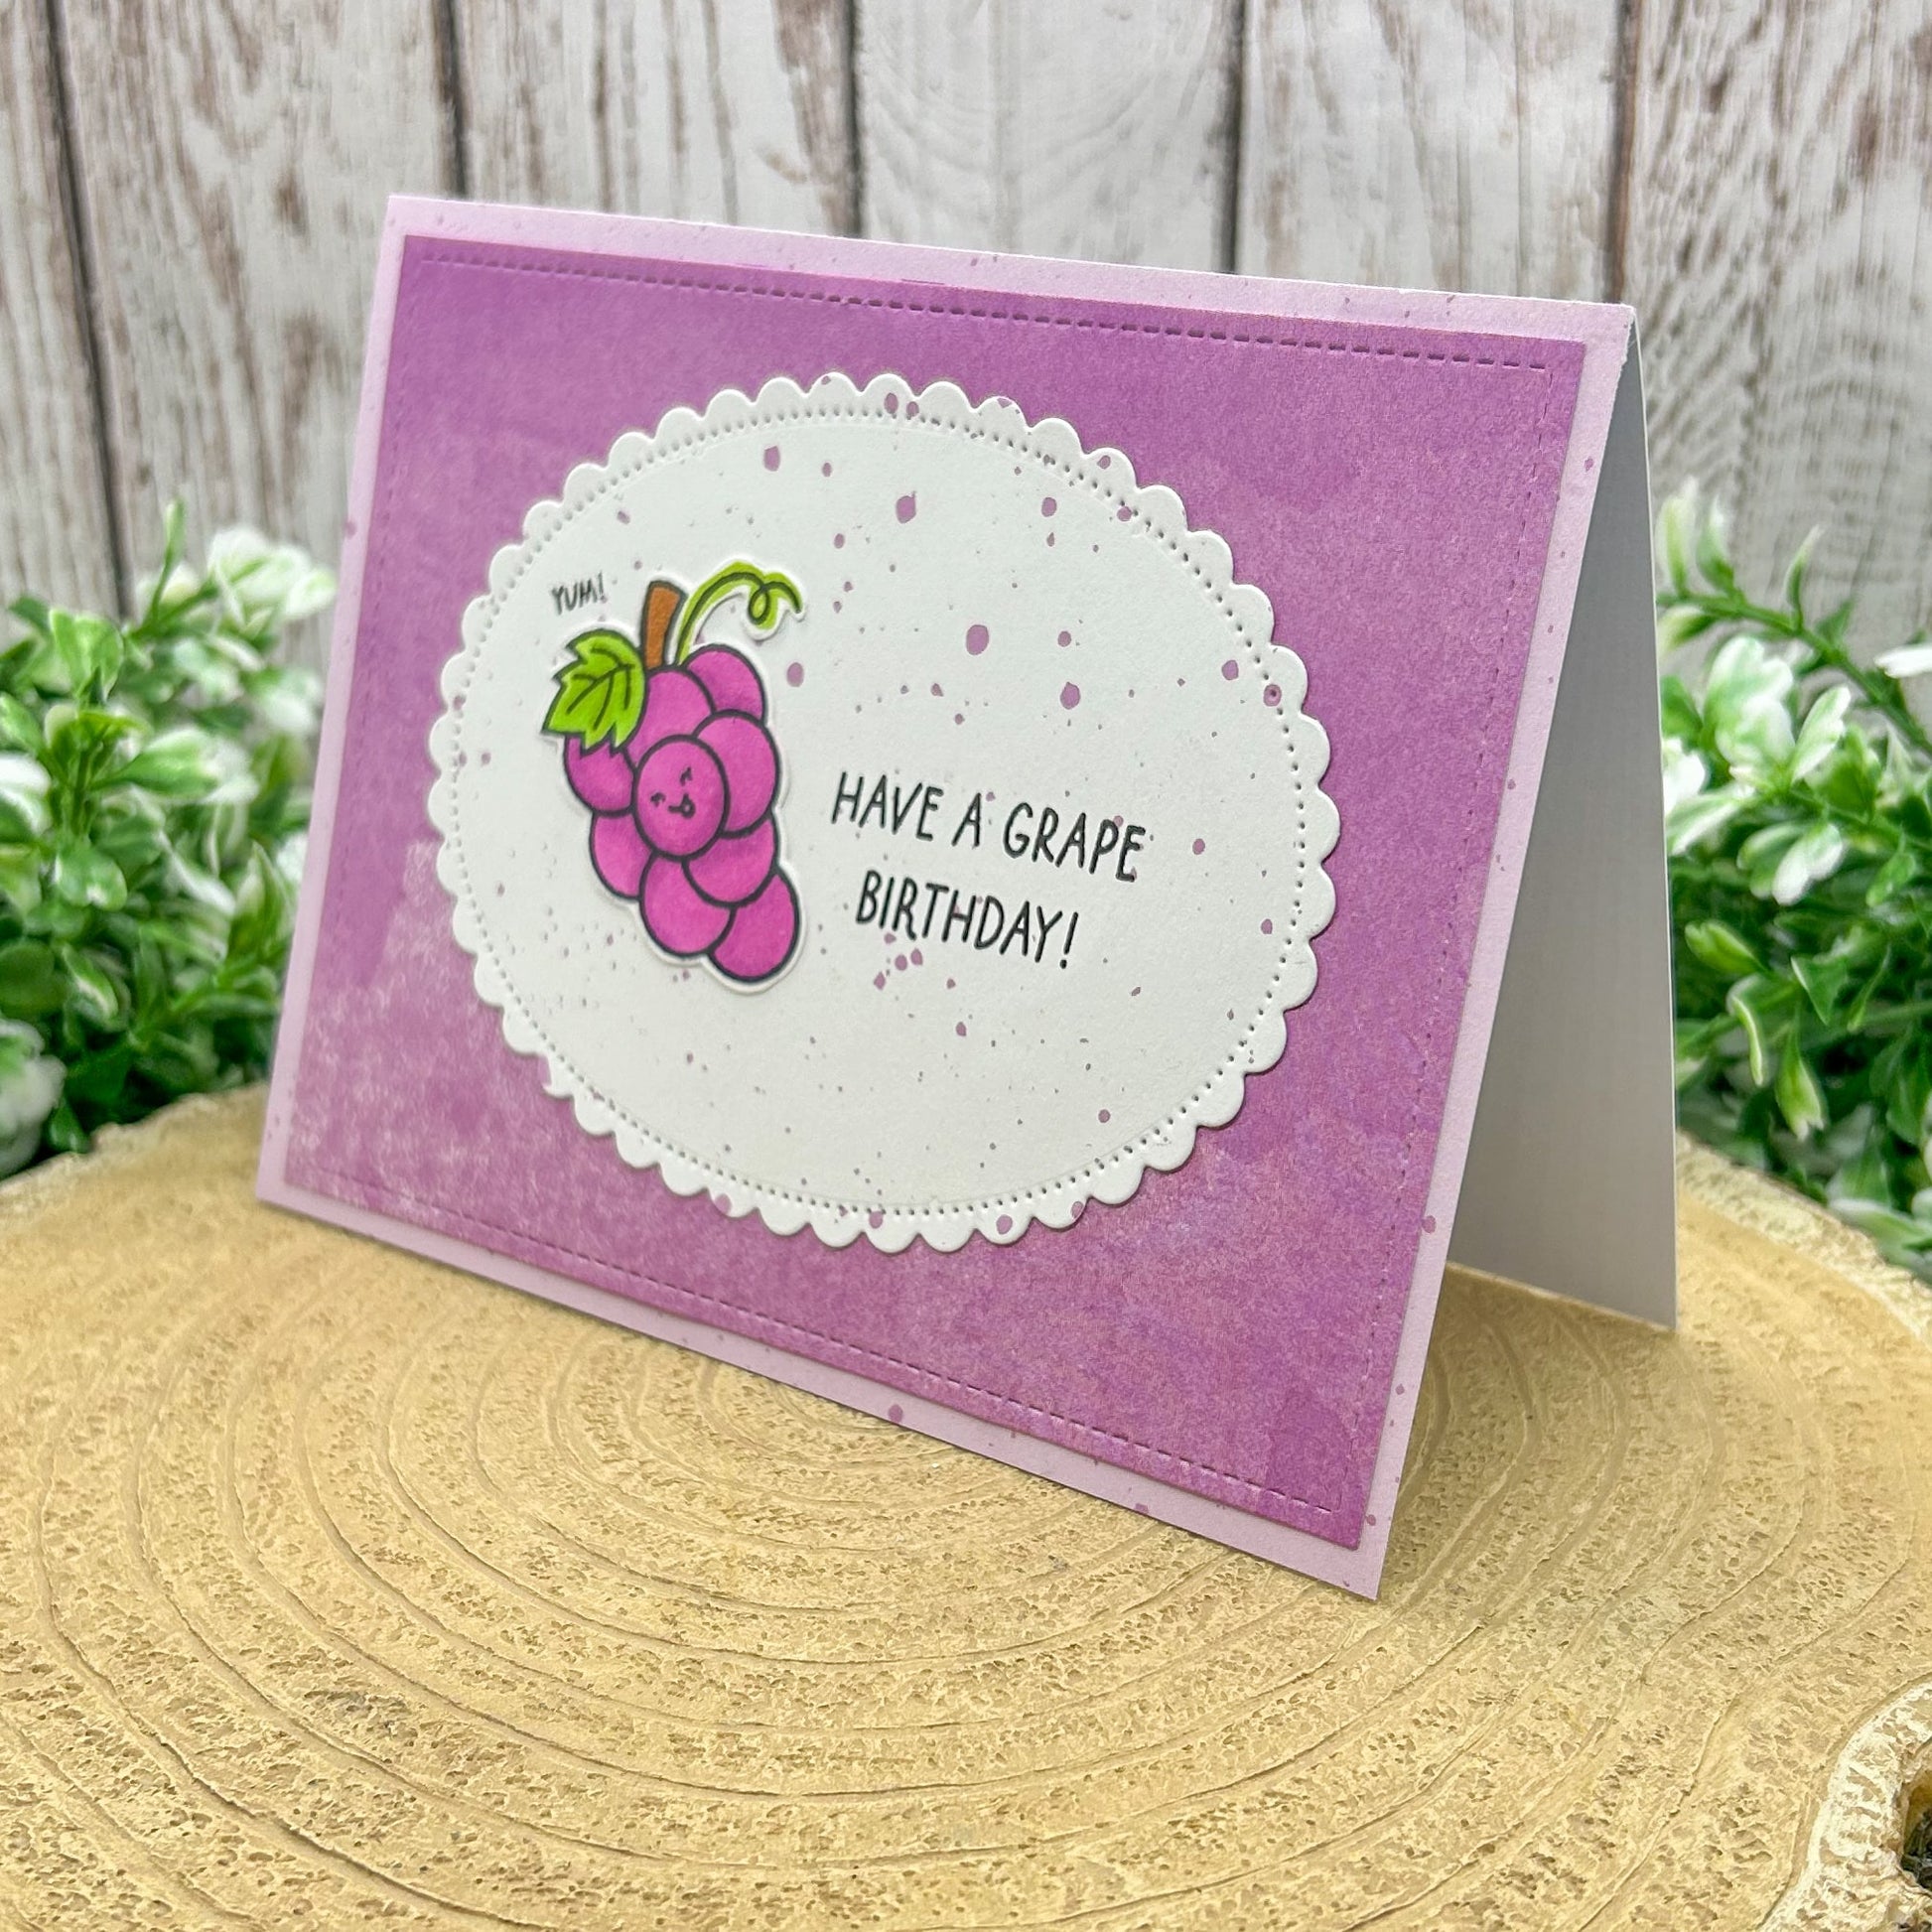 Have A Grape Birthday! Handmade Birthday Card-1